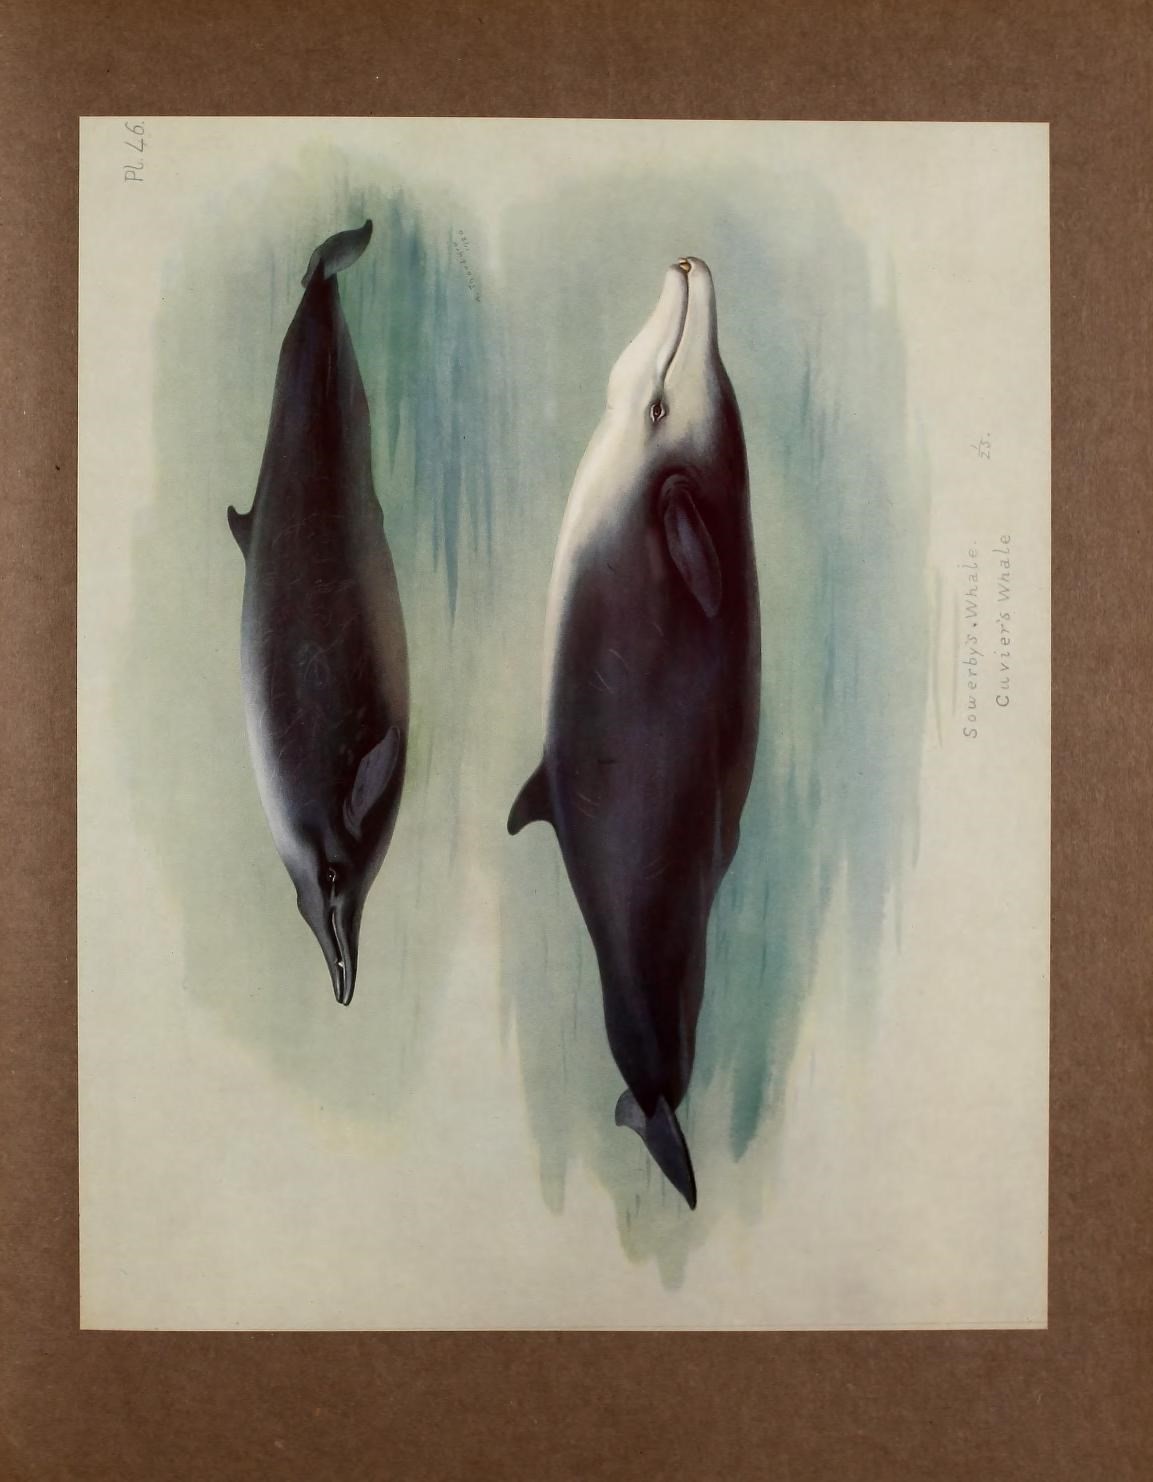 Image de Baleine de Cuvier